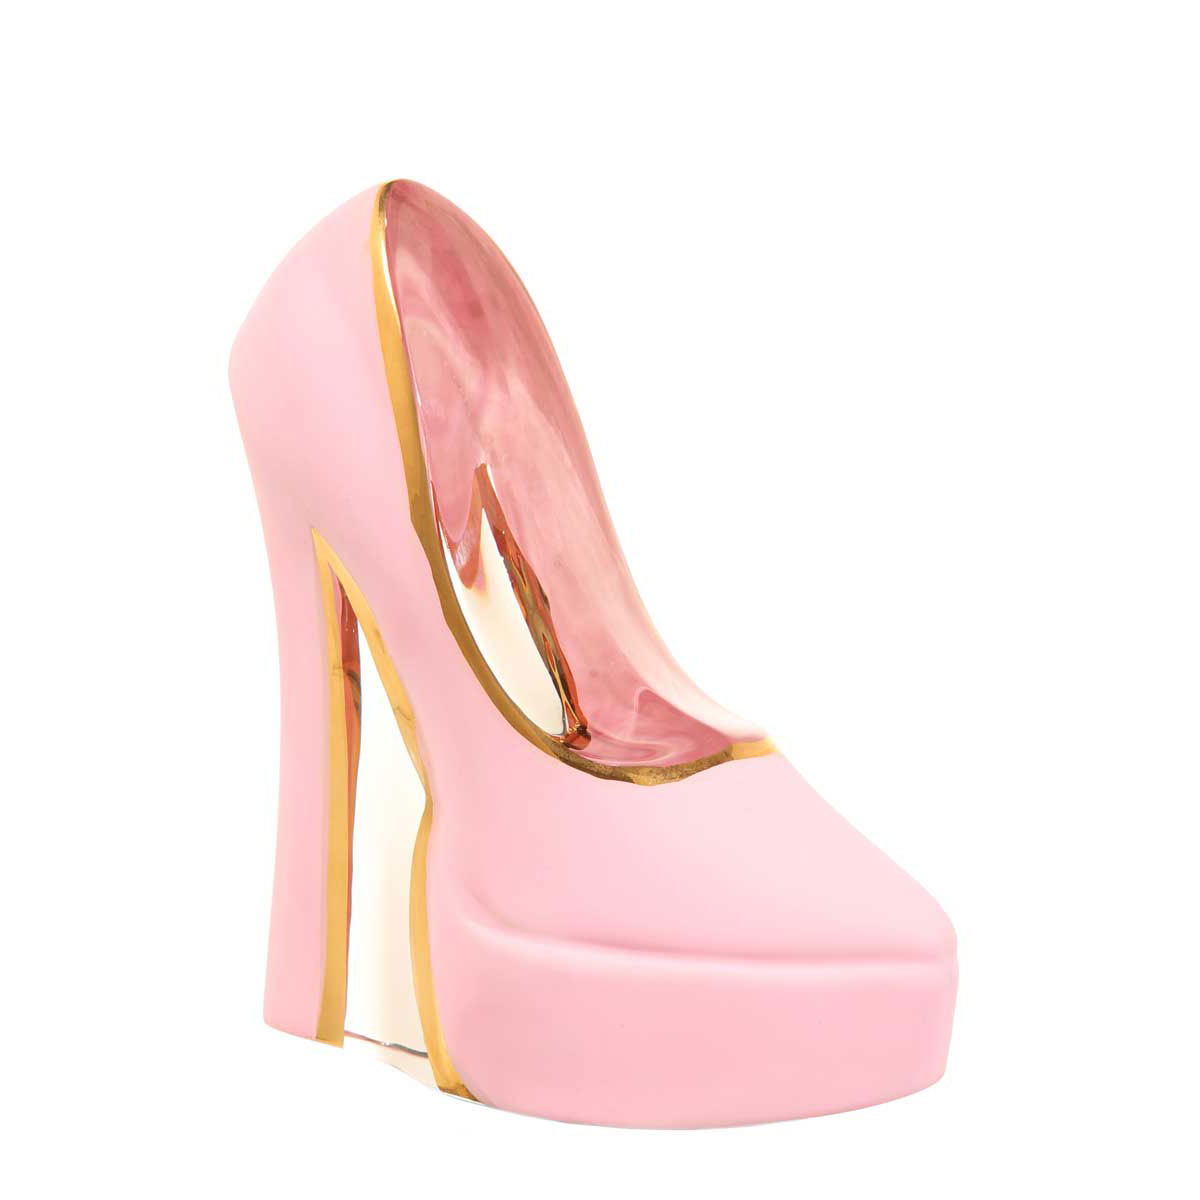 Kosta Boda Make Up Shoe, Pearl Pink Stiletto